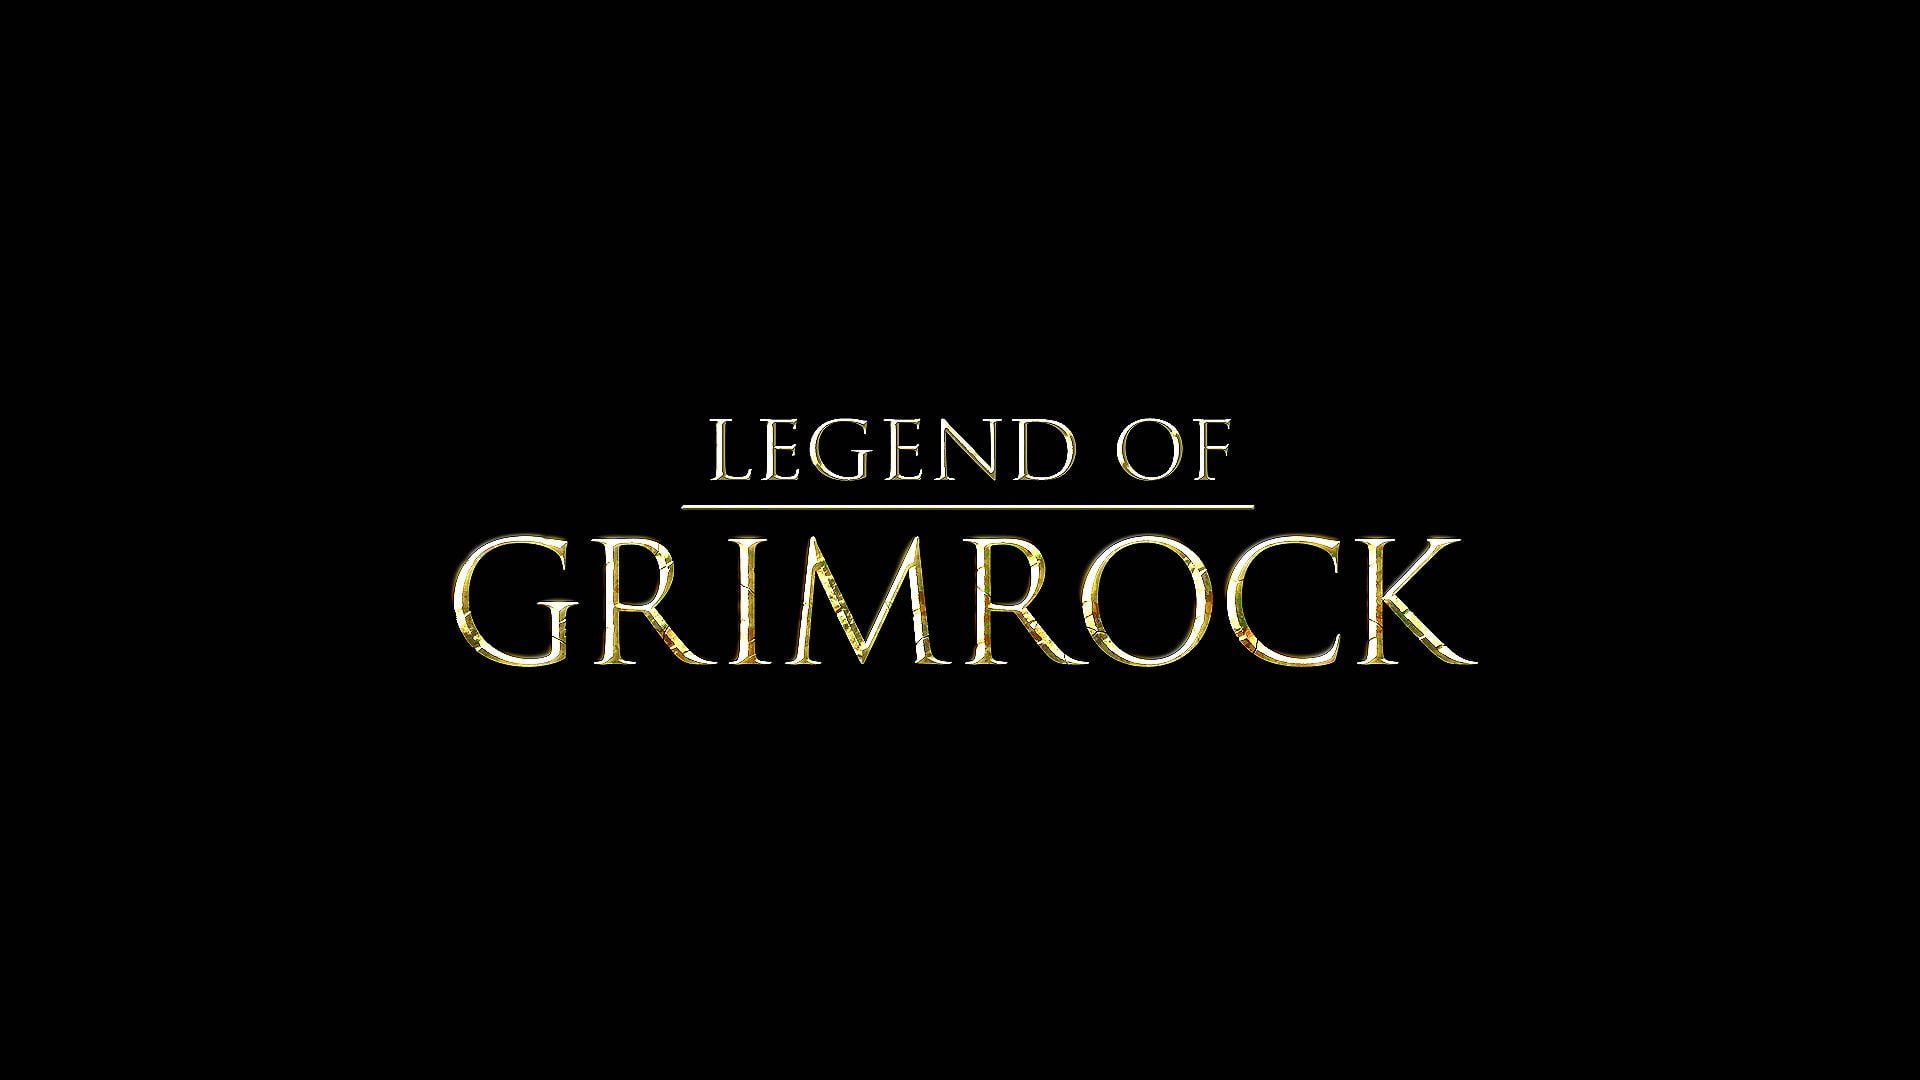 action, crawling, dungeon, fantasy, grimlock, legend, legend of grimrock